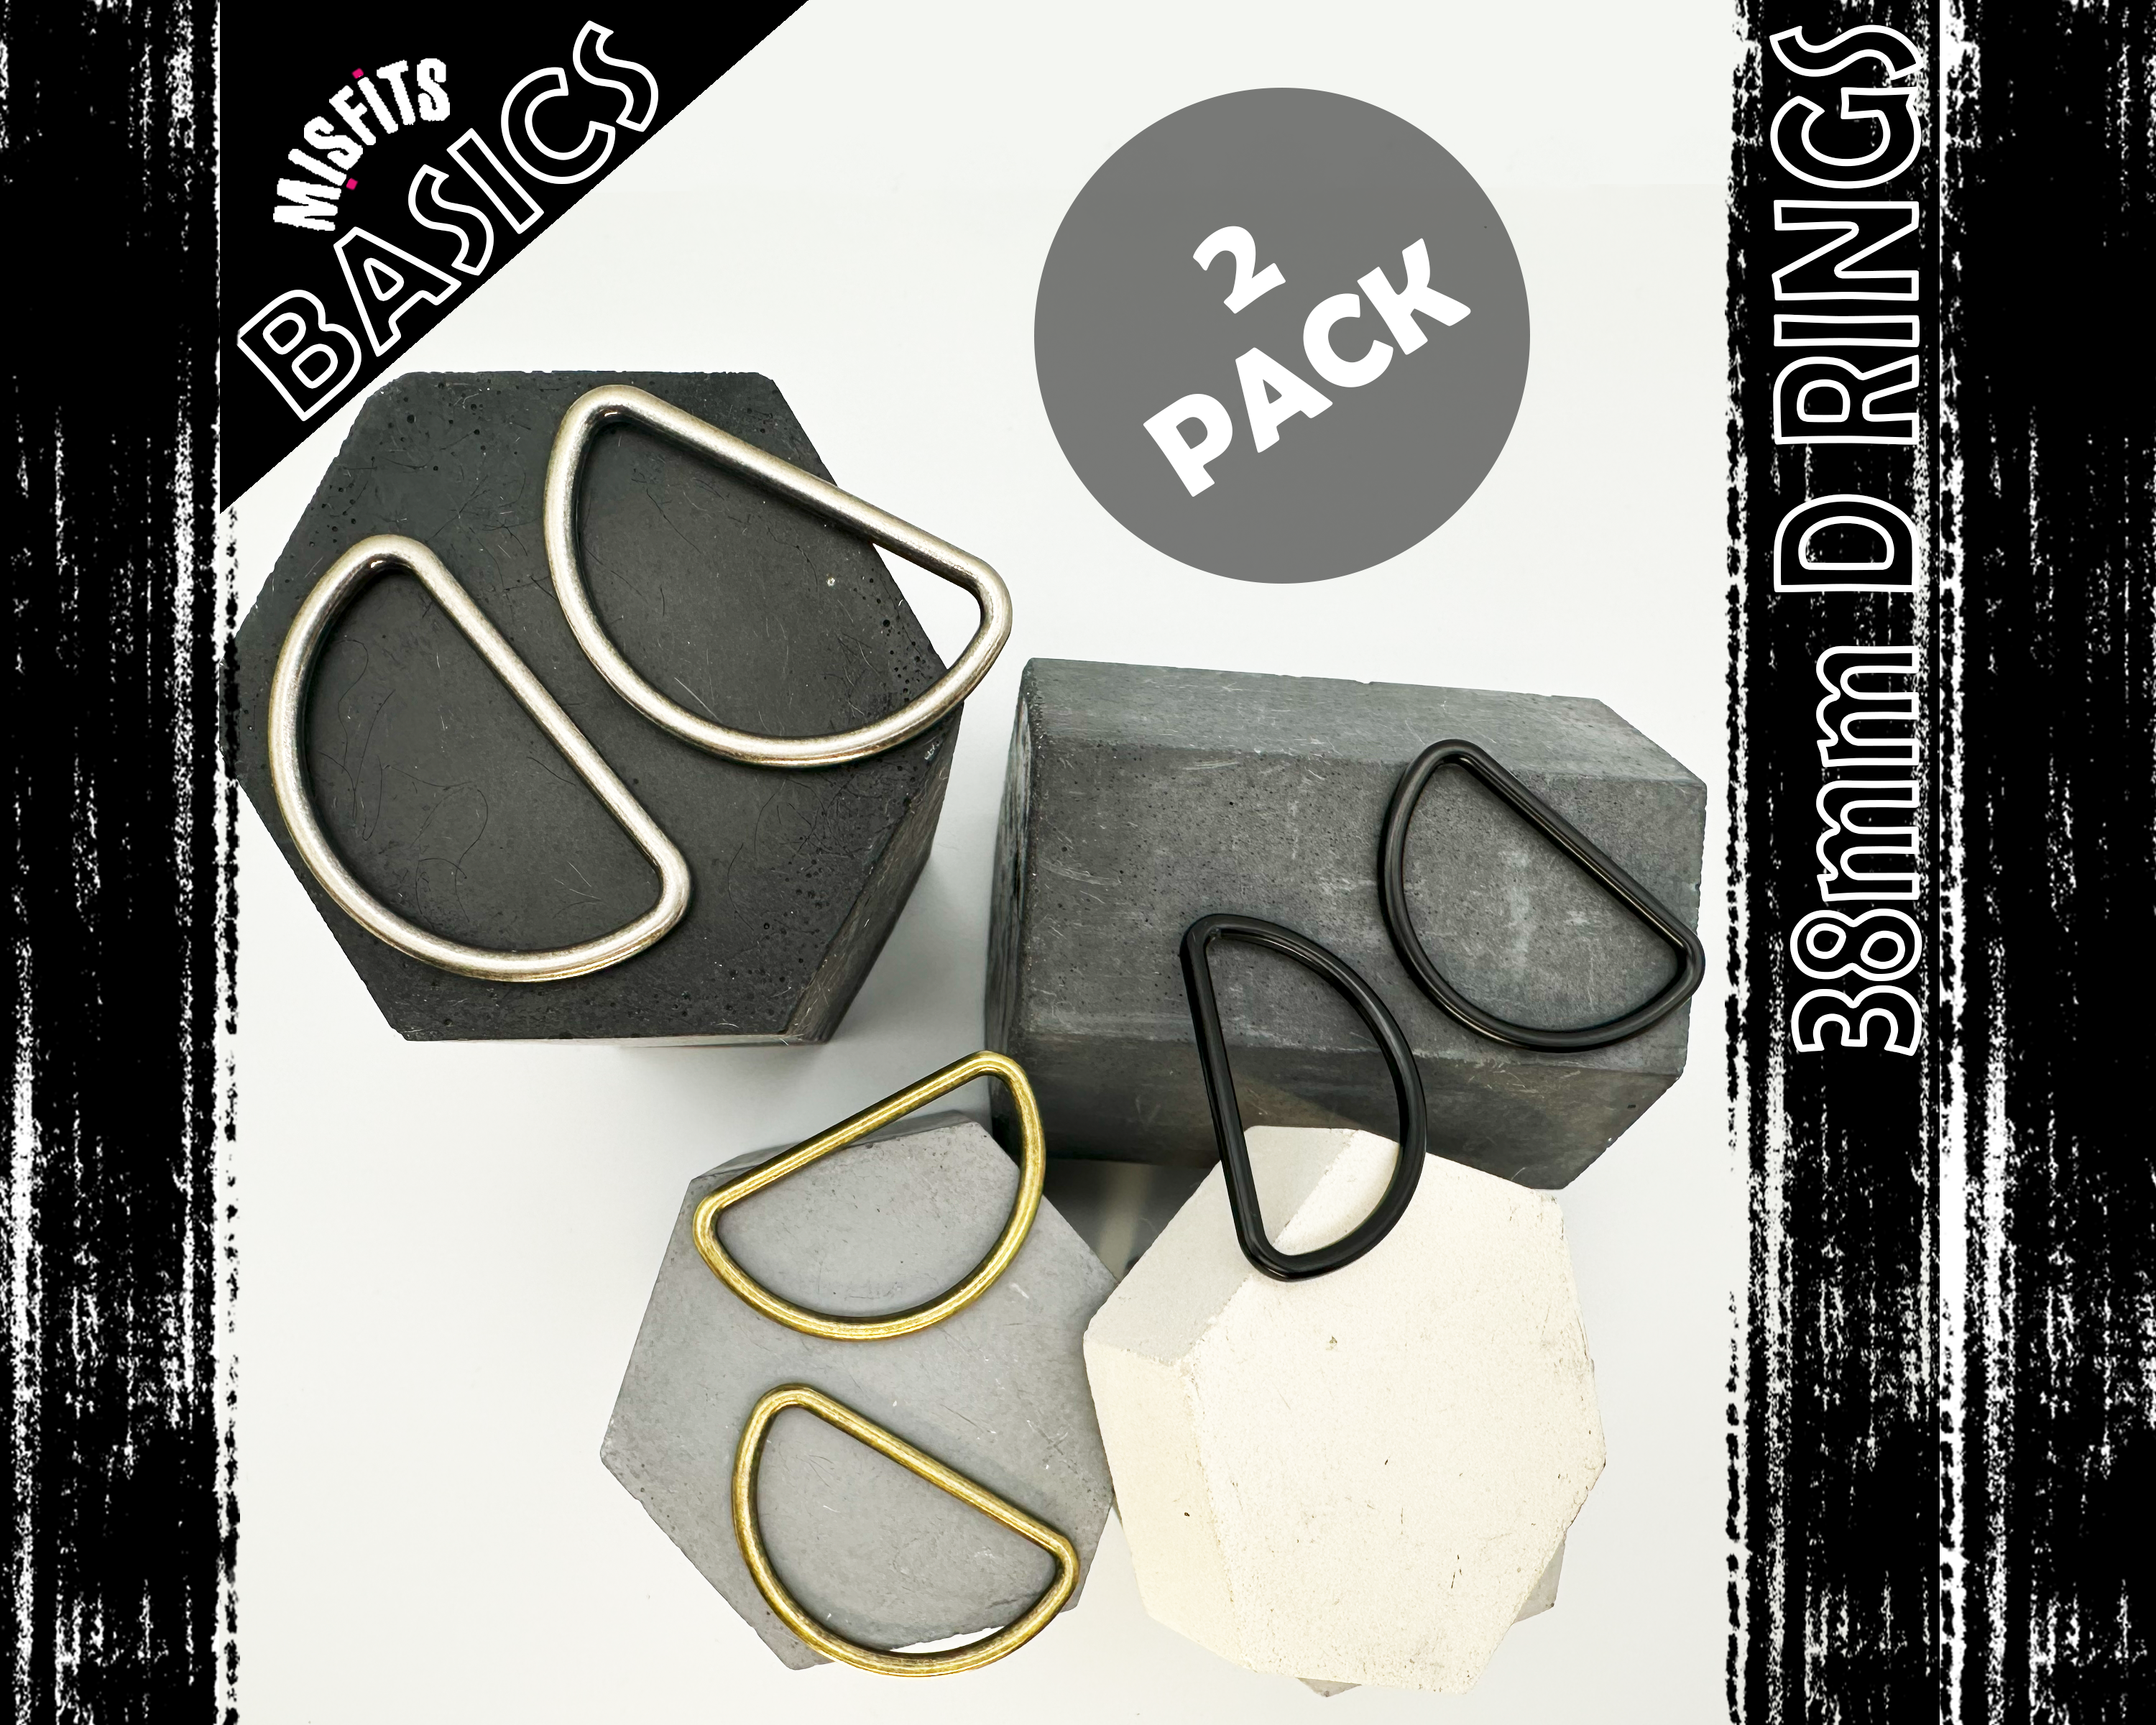 38mm D Rings for Bag Making Crafts, 2 pack, Metal Buckle fittings for 1.5" webbing strap, Bag Hardware